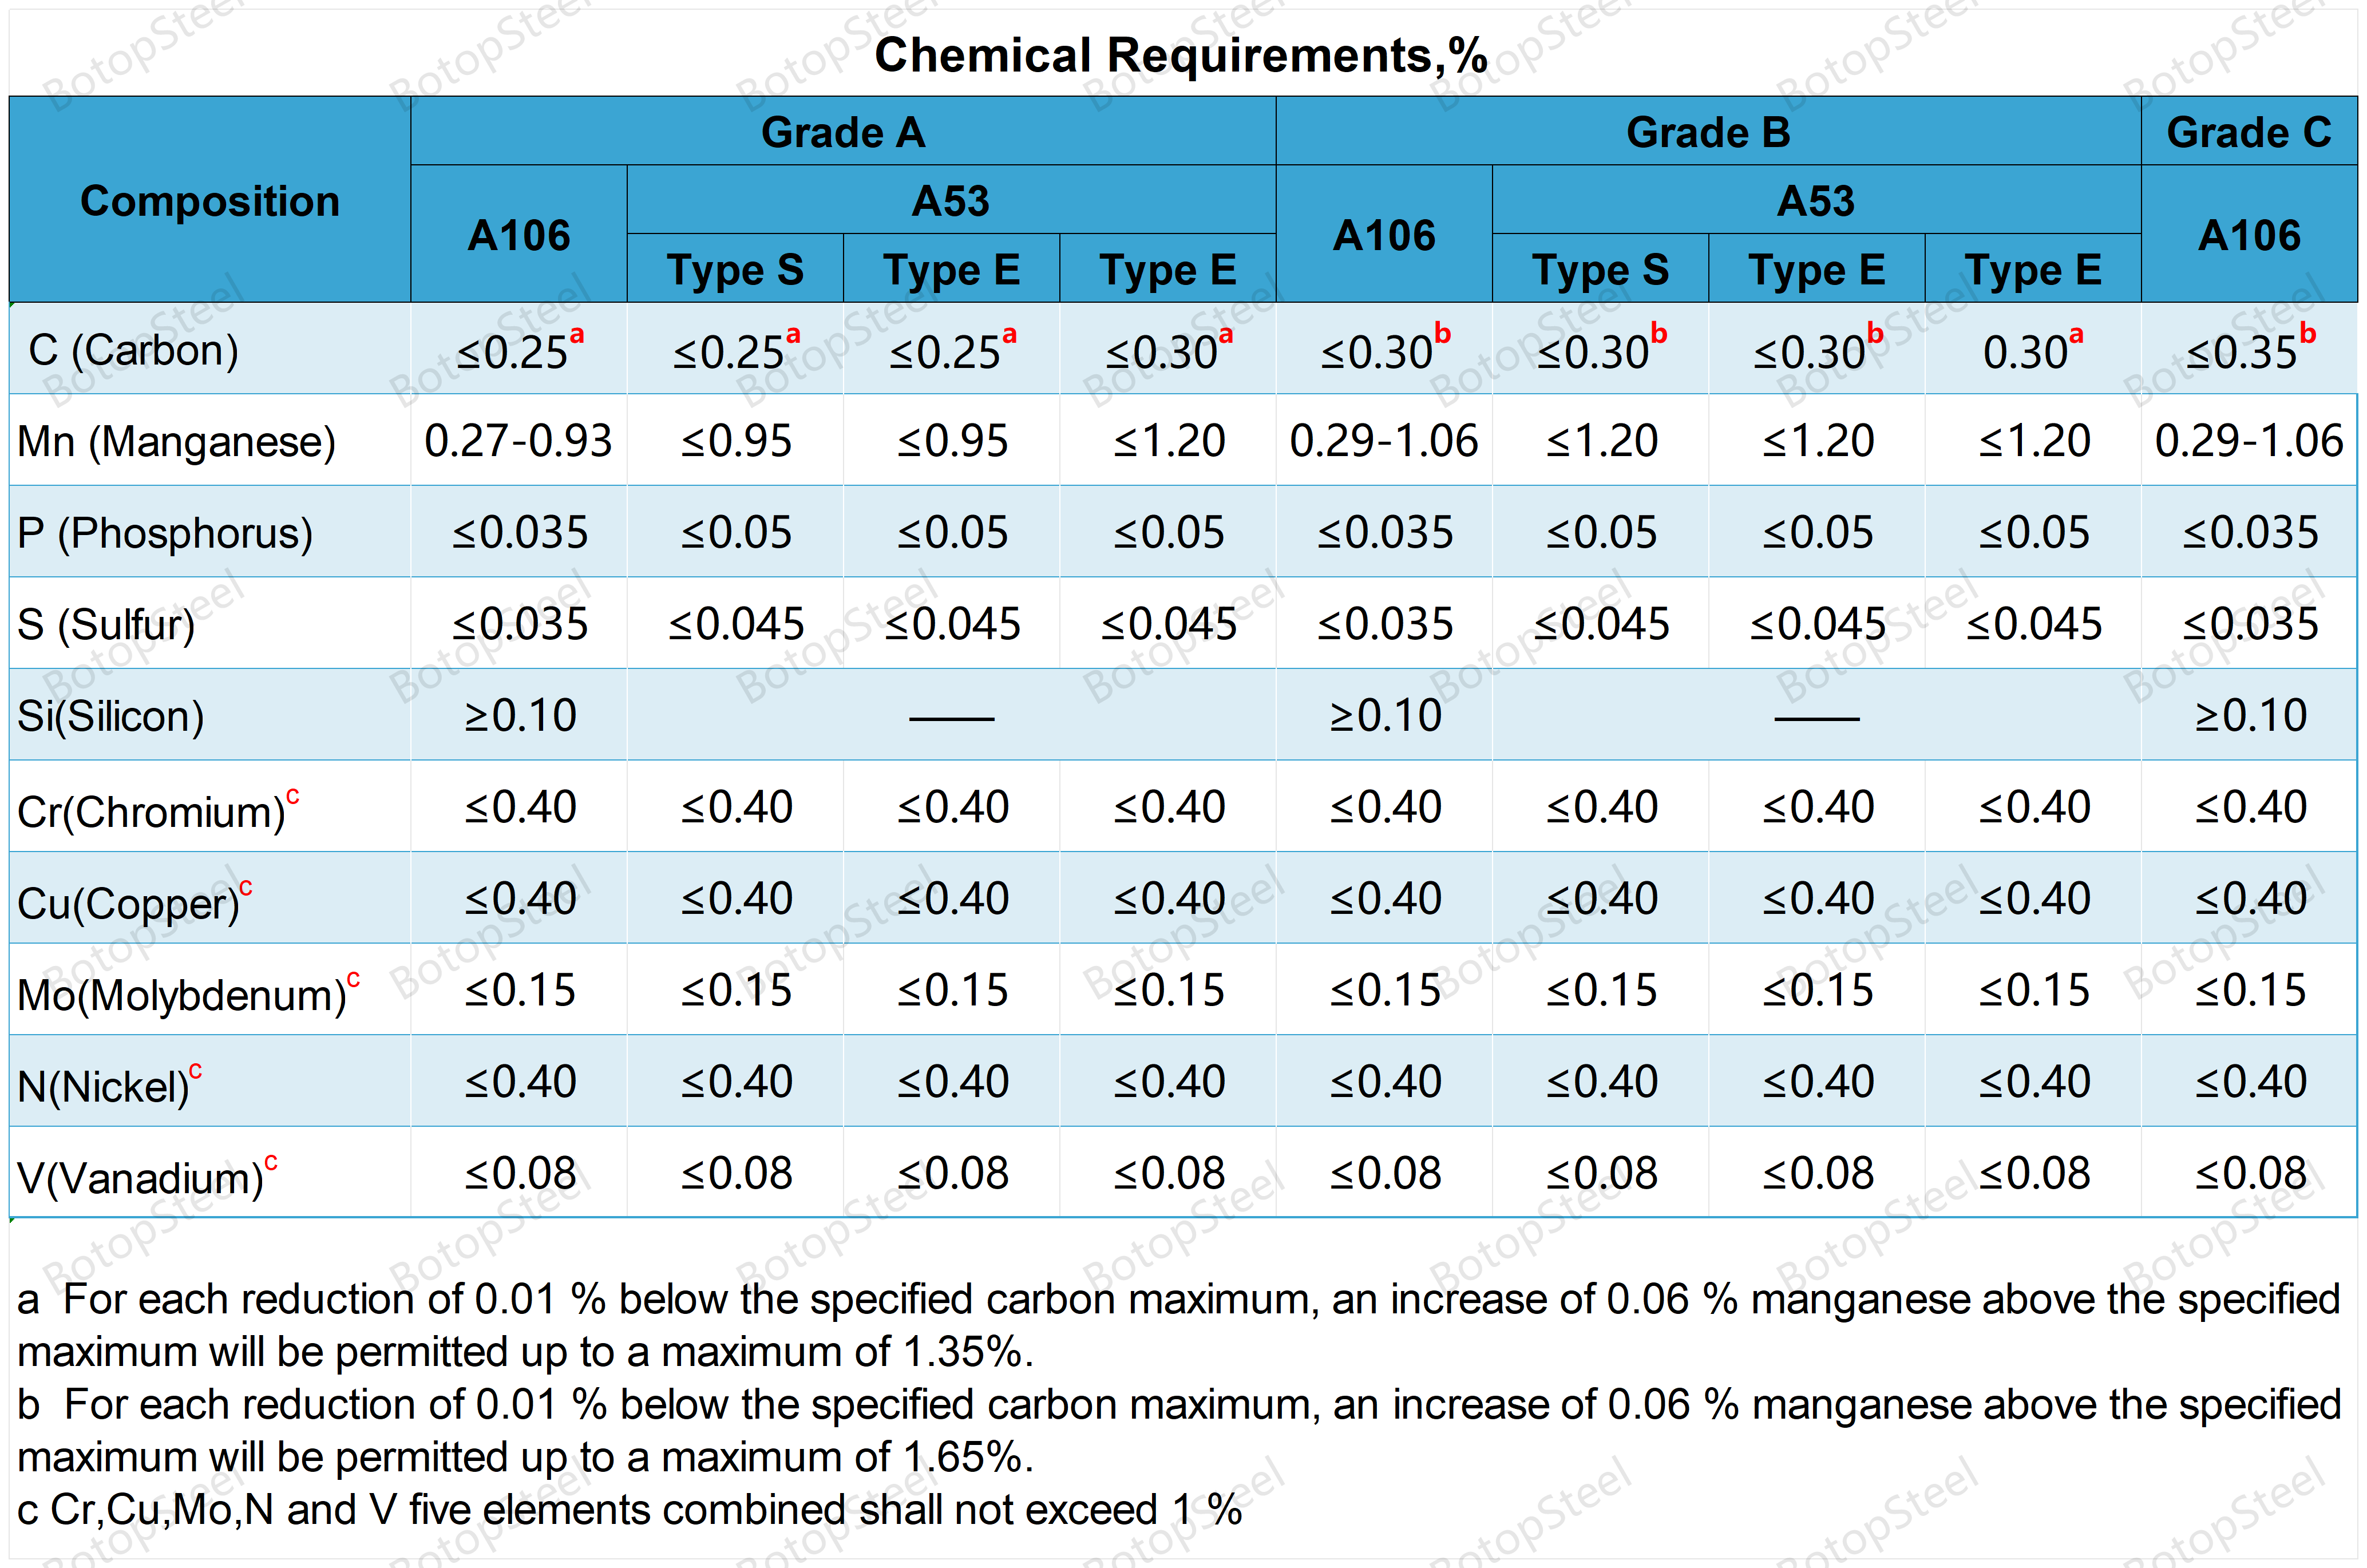 A06 vs A53 - Chemical Composition